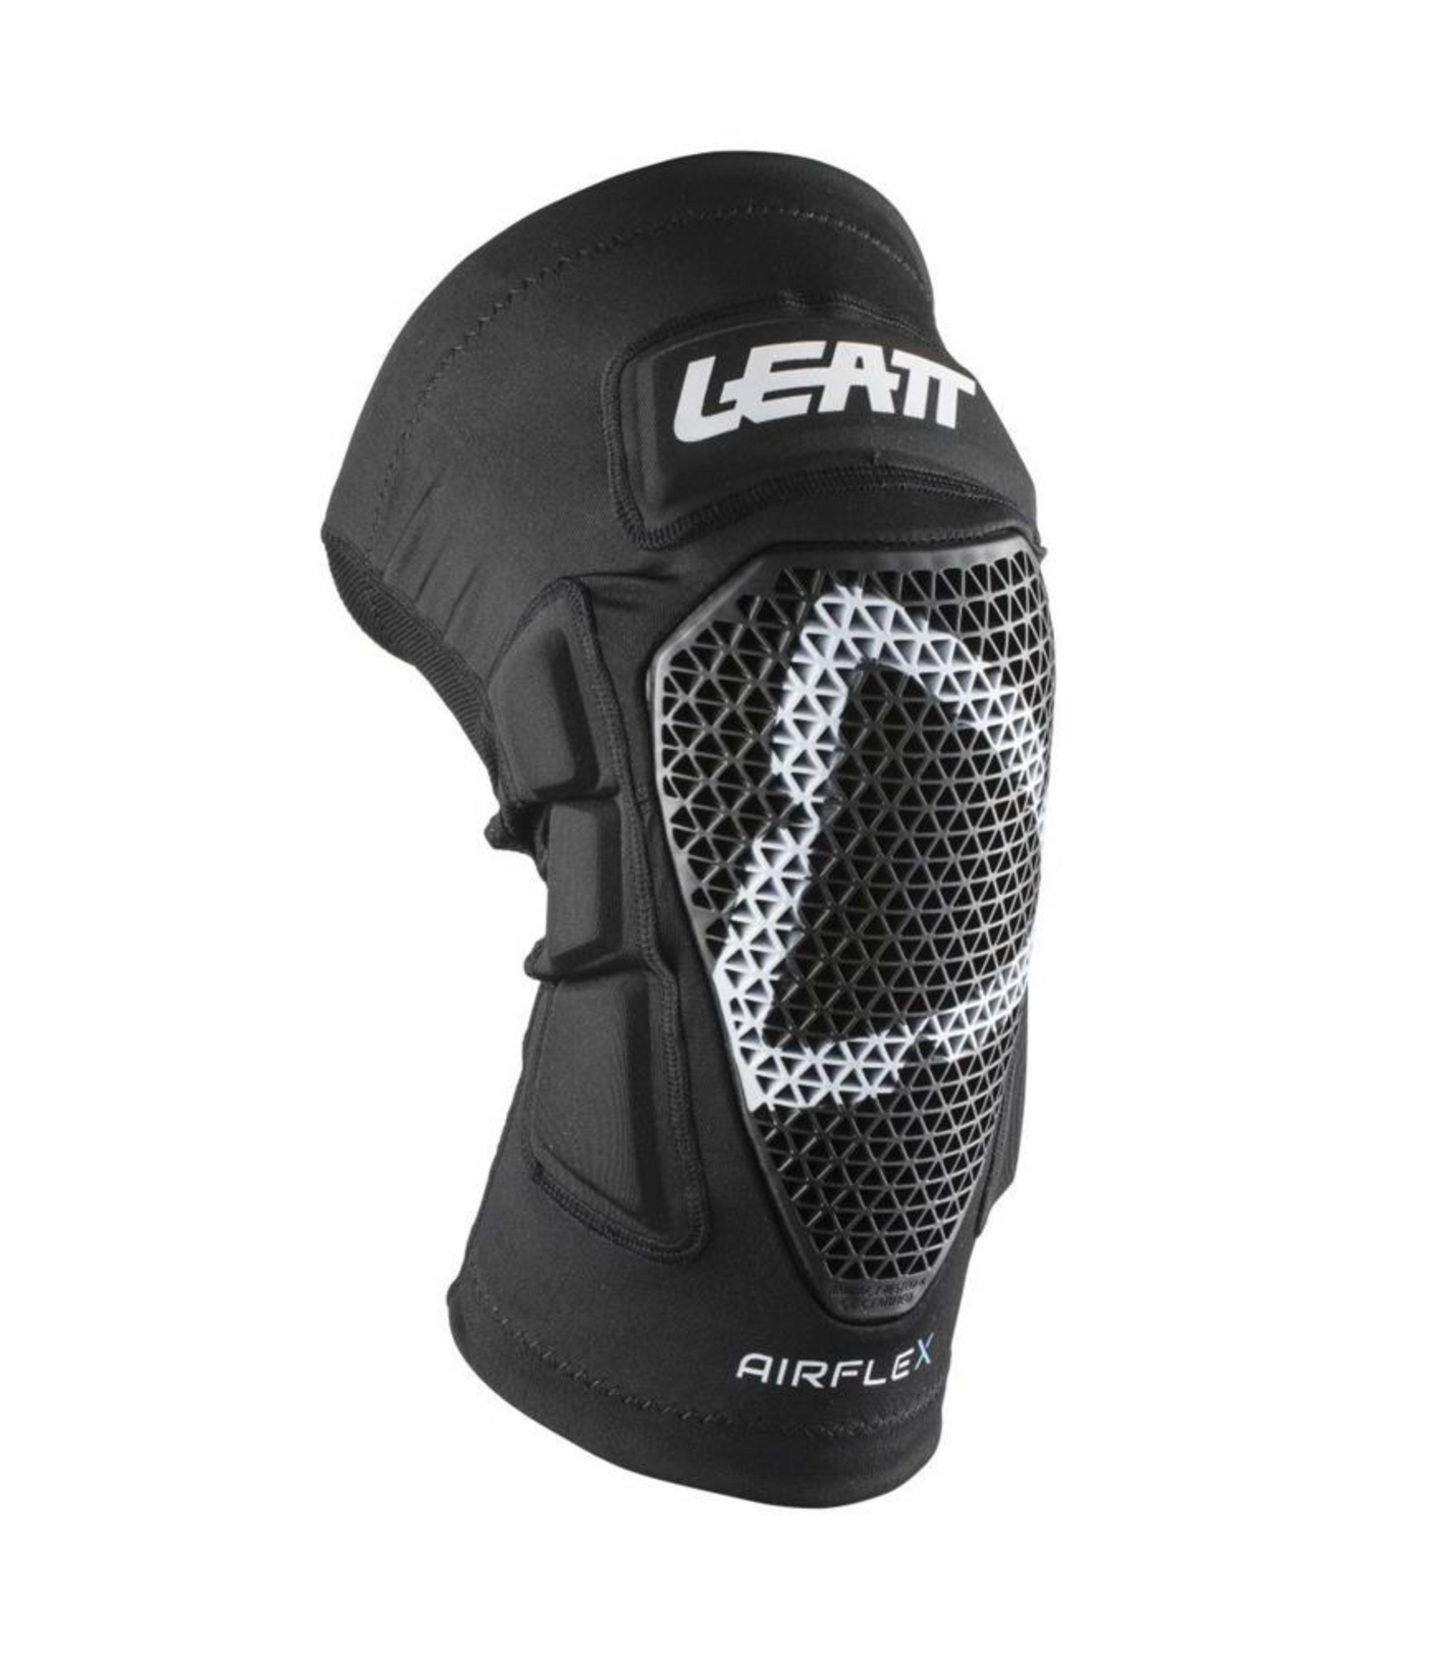 Leatt Protection Knee Guard Airflex Pro Black